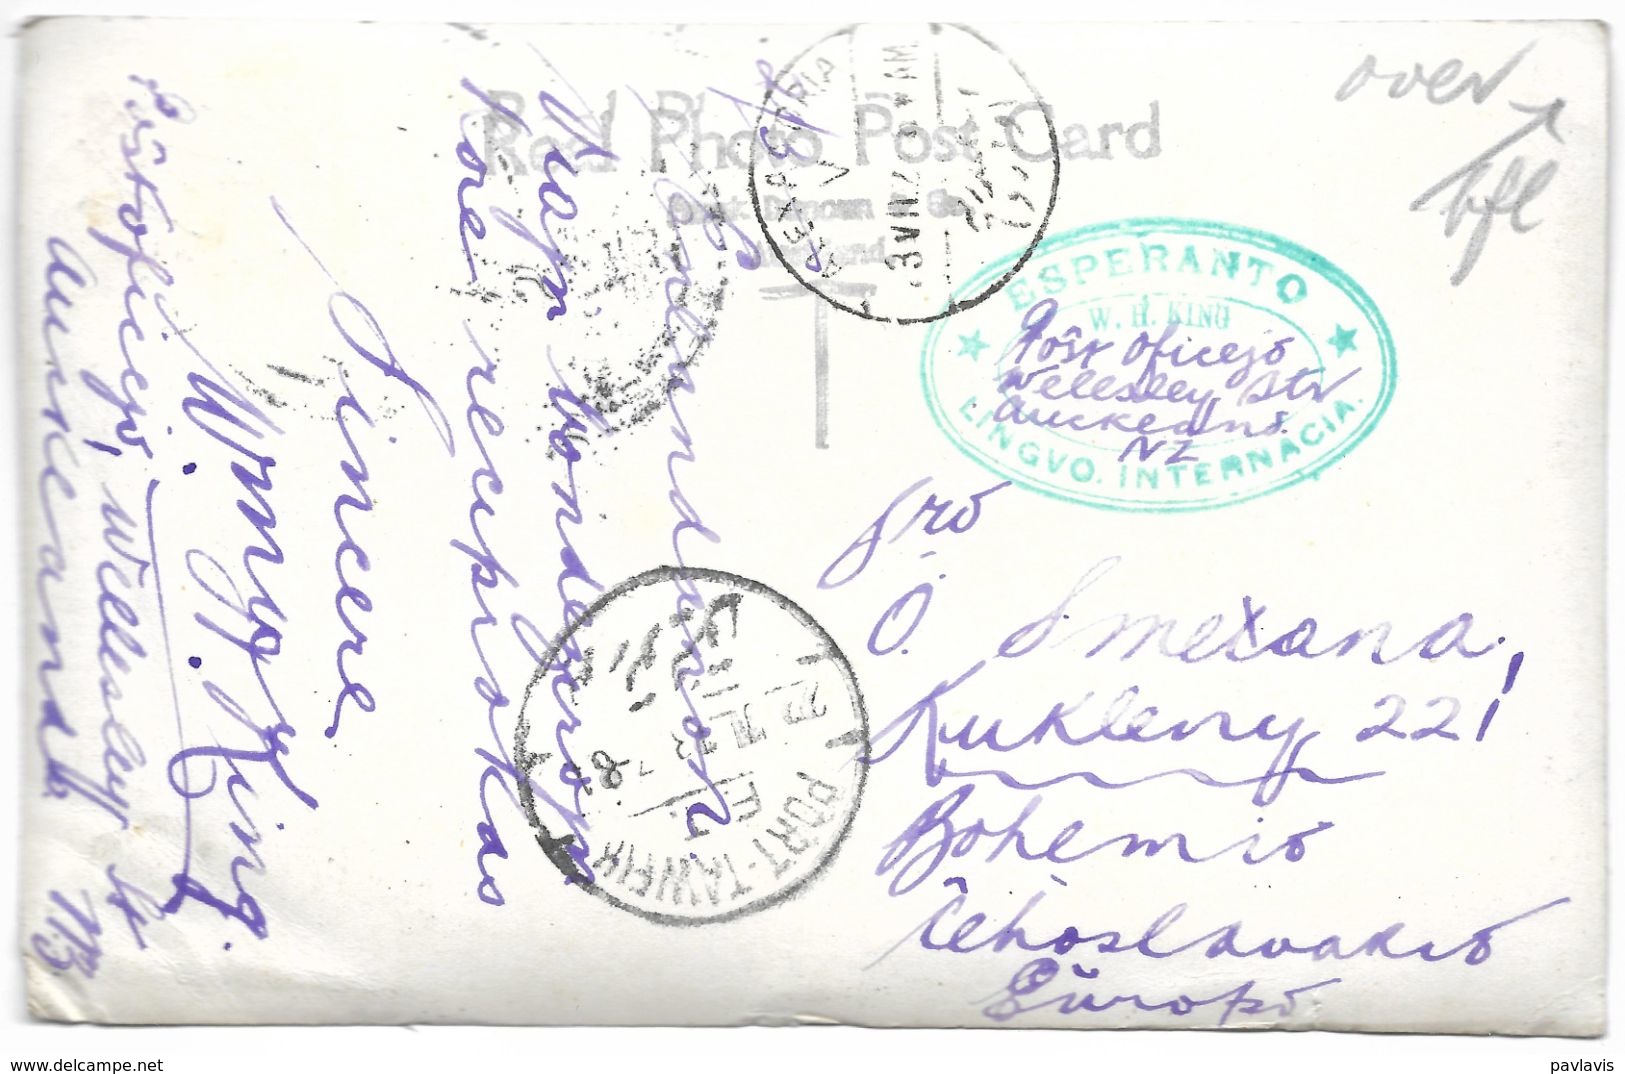 New Zealand – F. J. Denton Wanganui – Esperanto – A Stamp Auckland – Year 1923 - Ozeanien